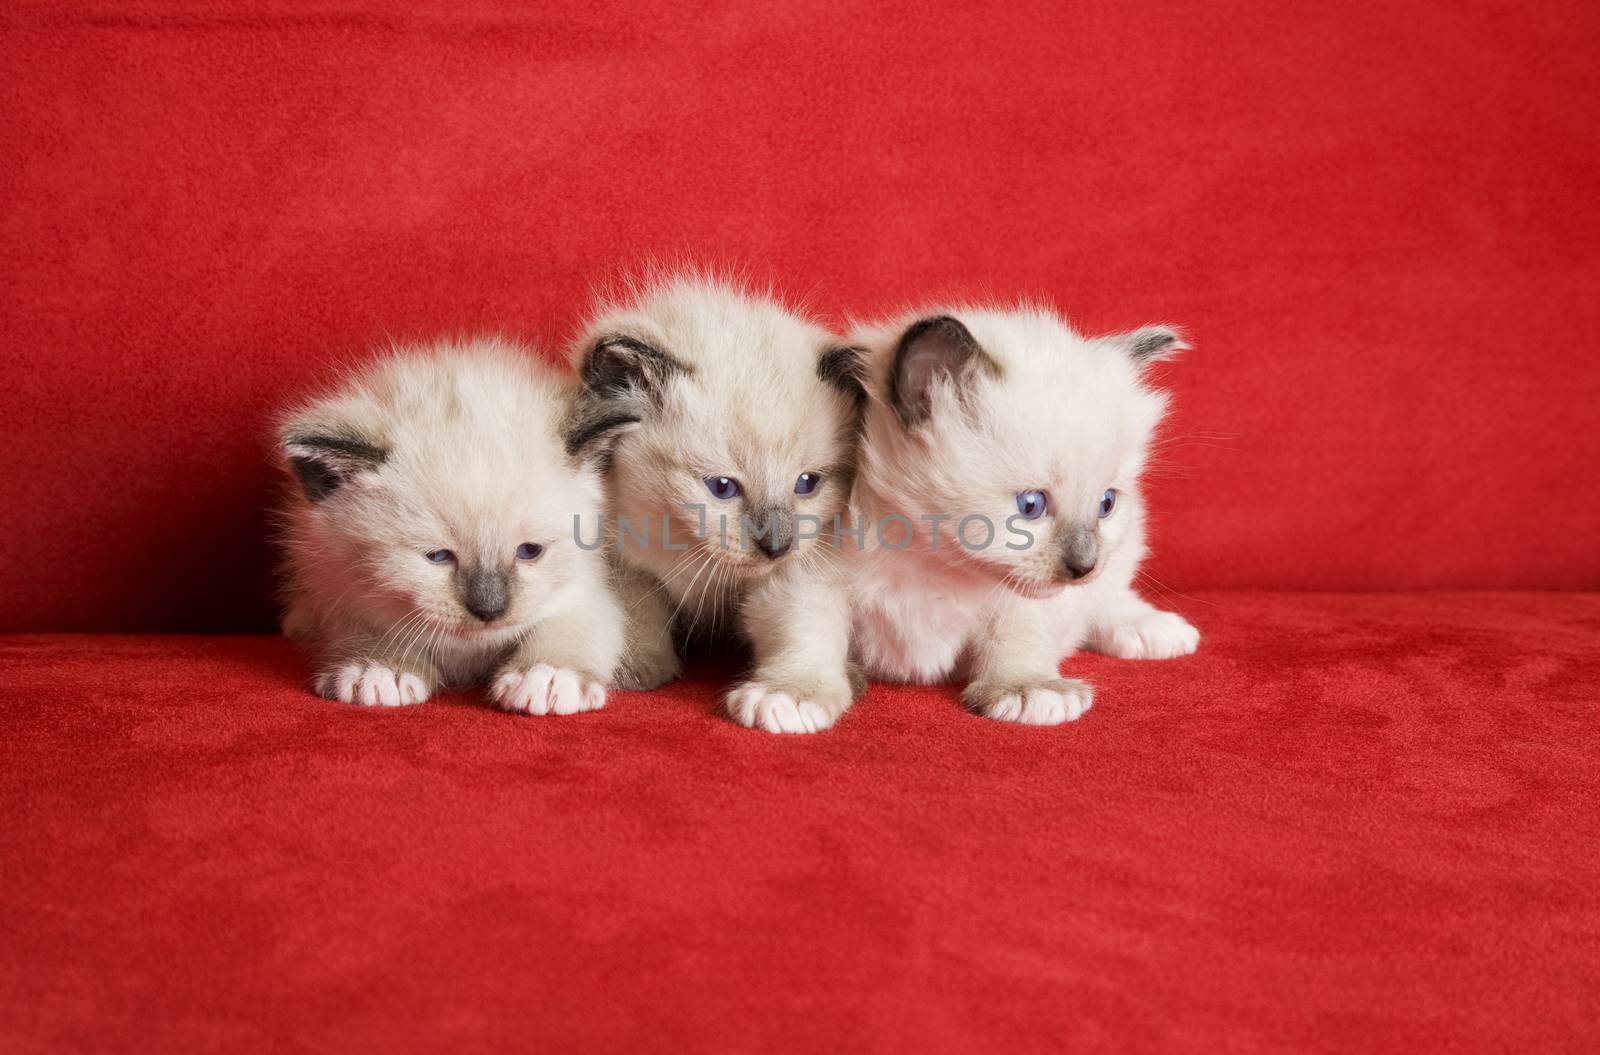 Three Little Kittens by songbird839